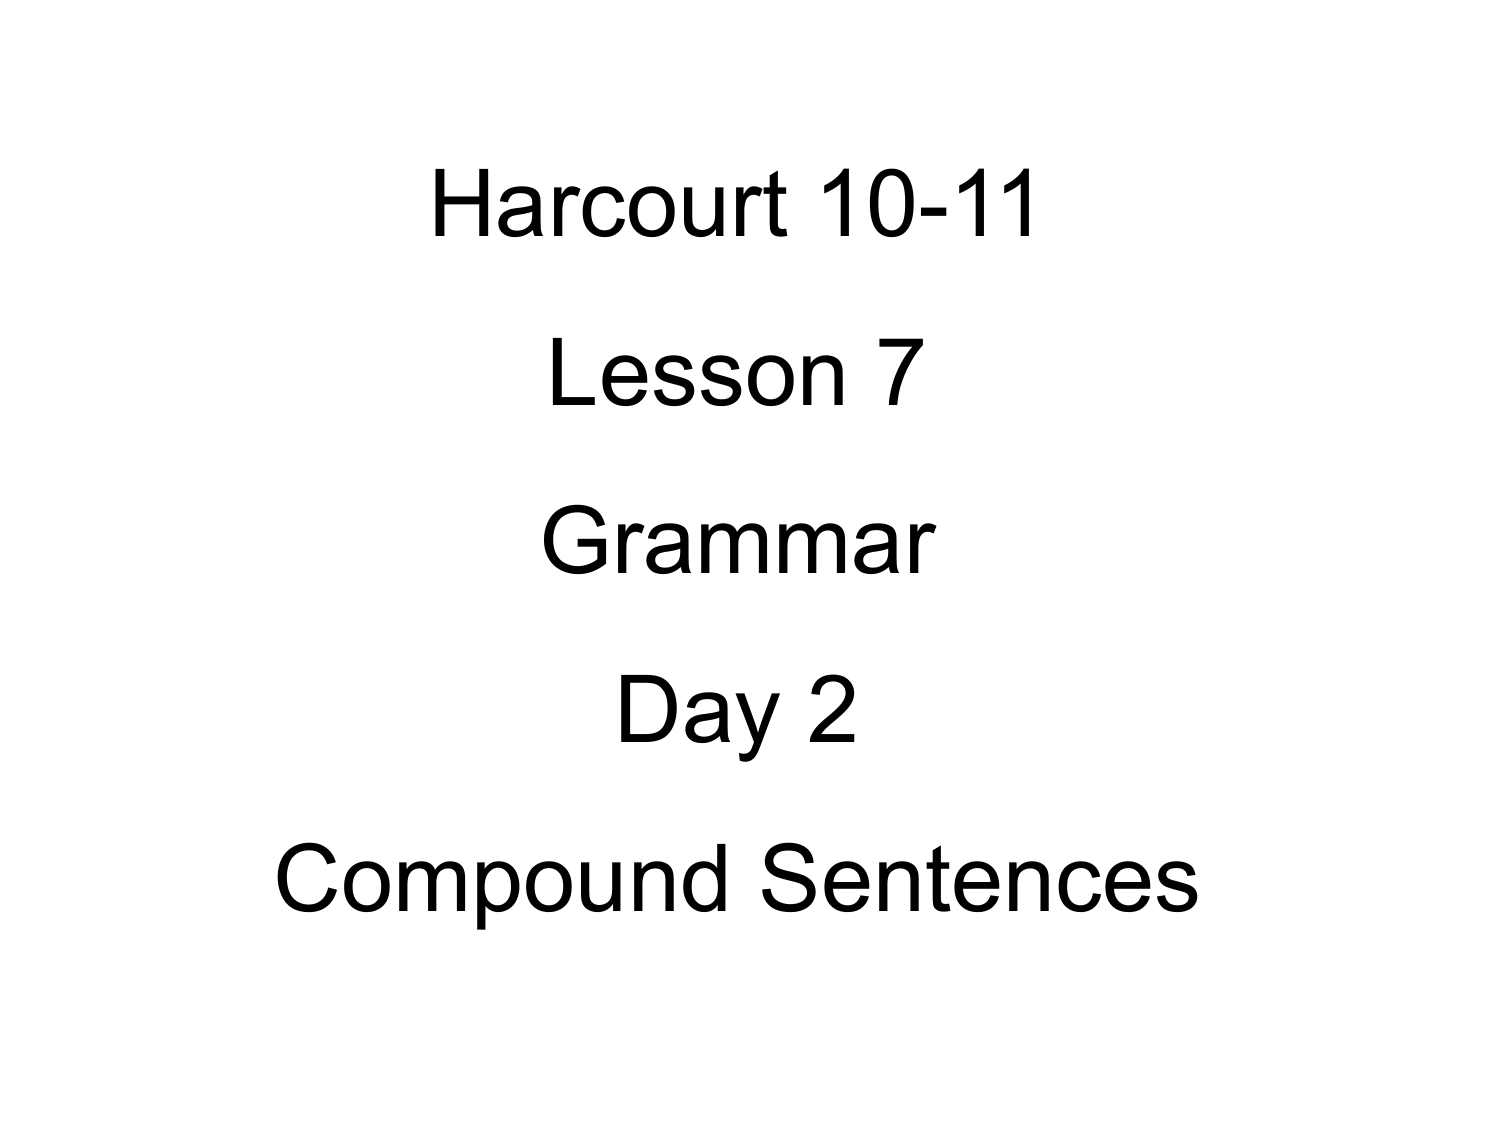 sentence-structure-worksheets-types-of-sentences-worksheets-db-excel